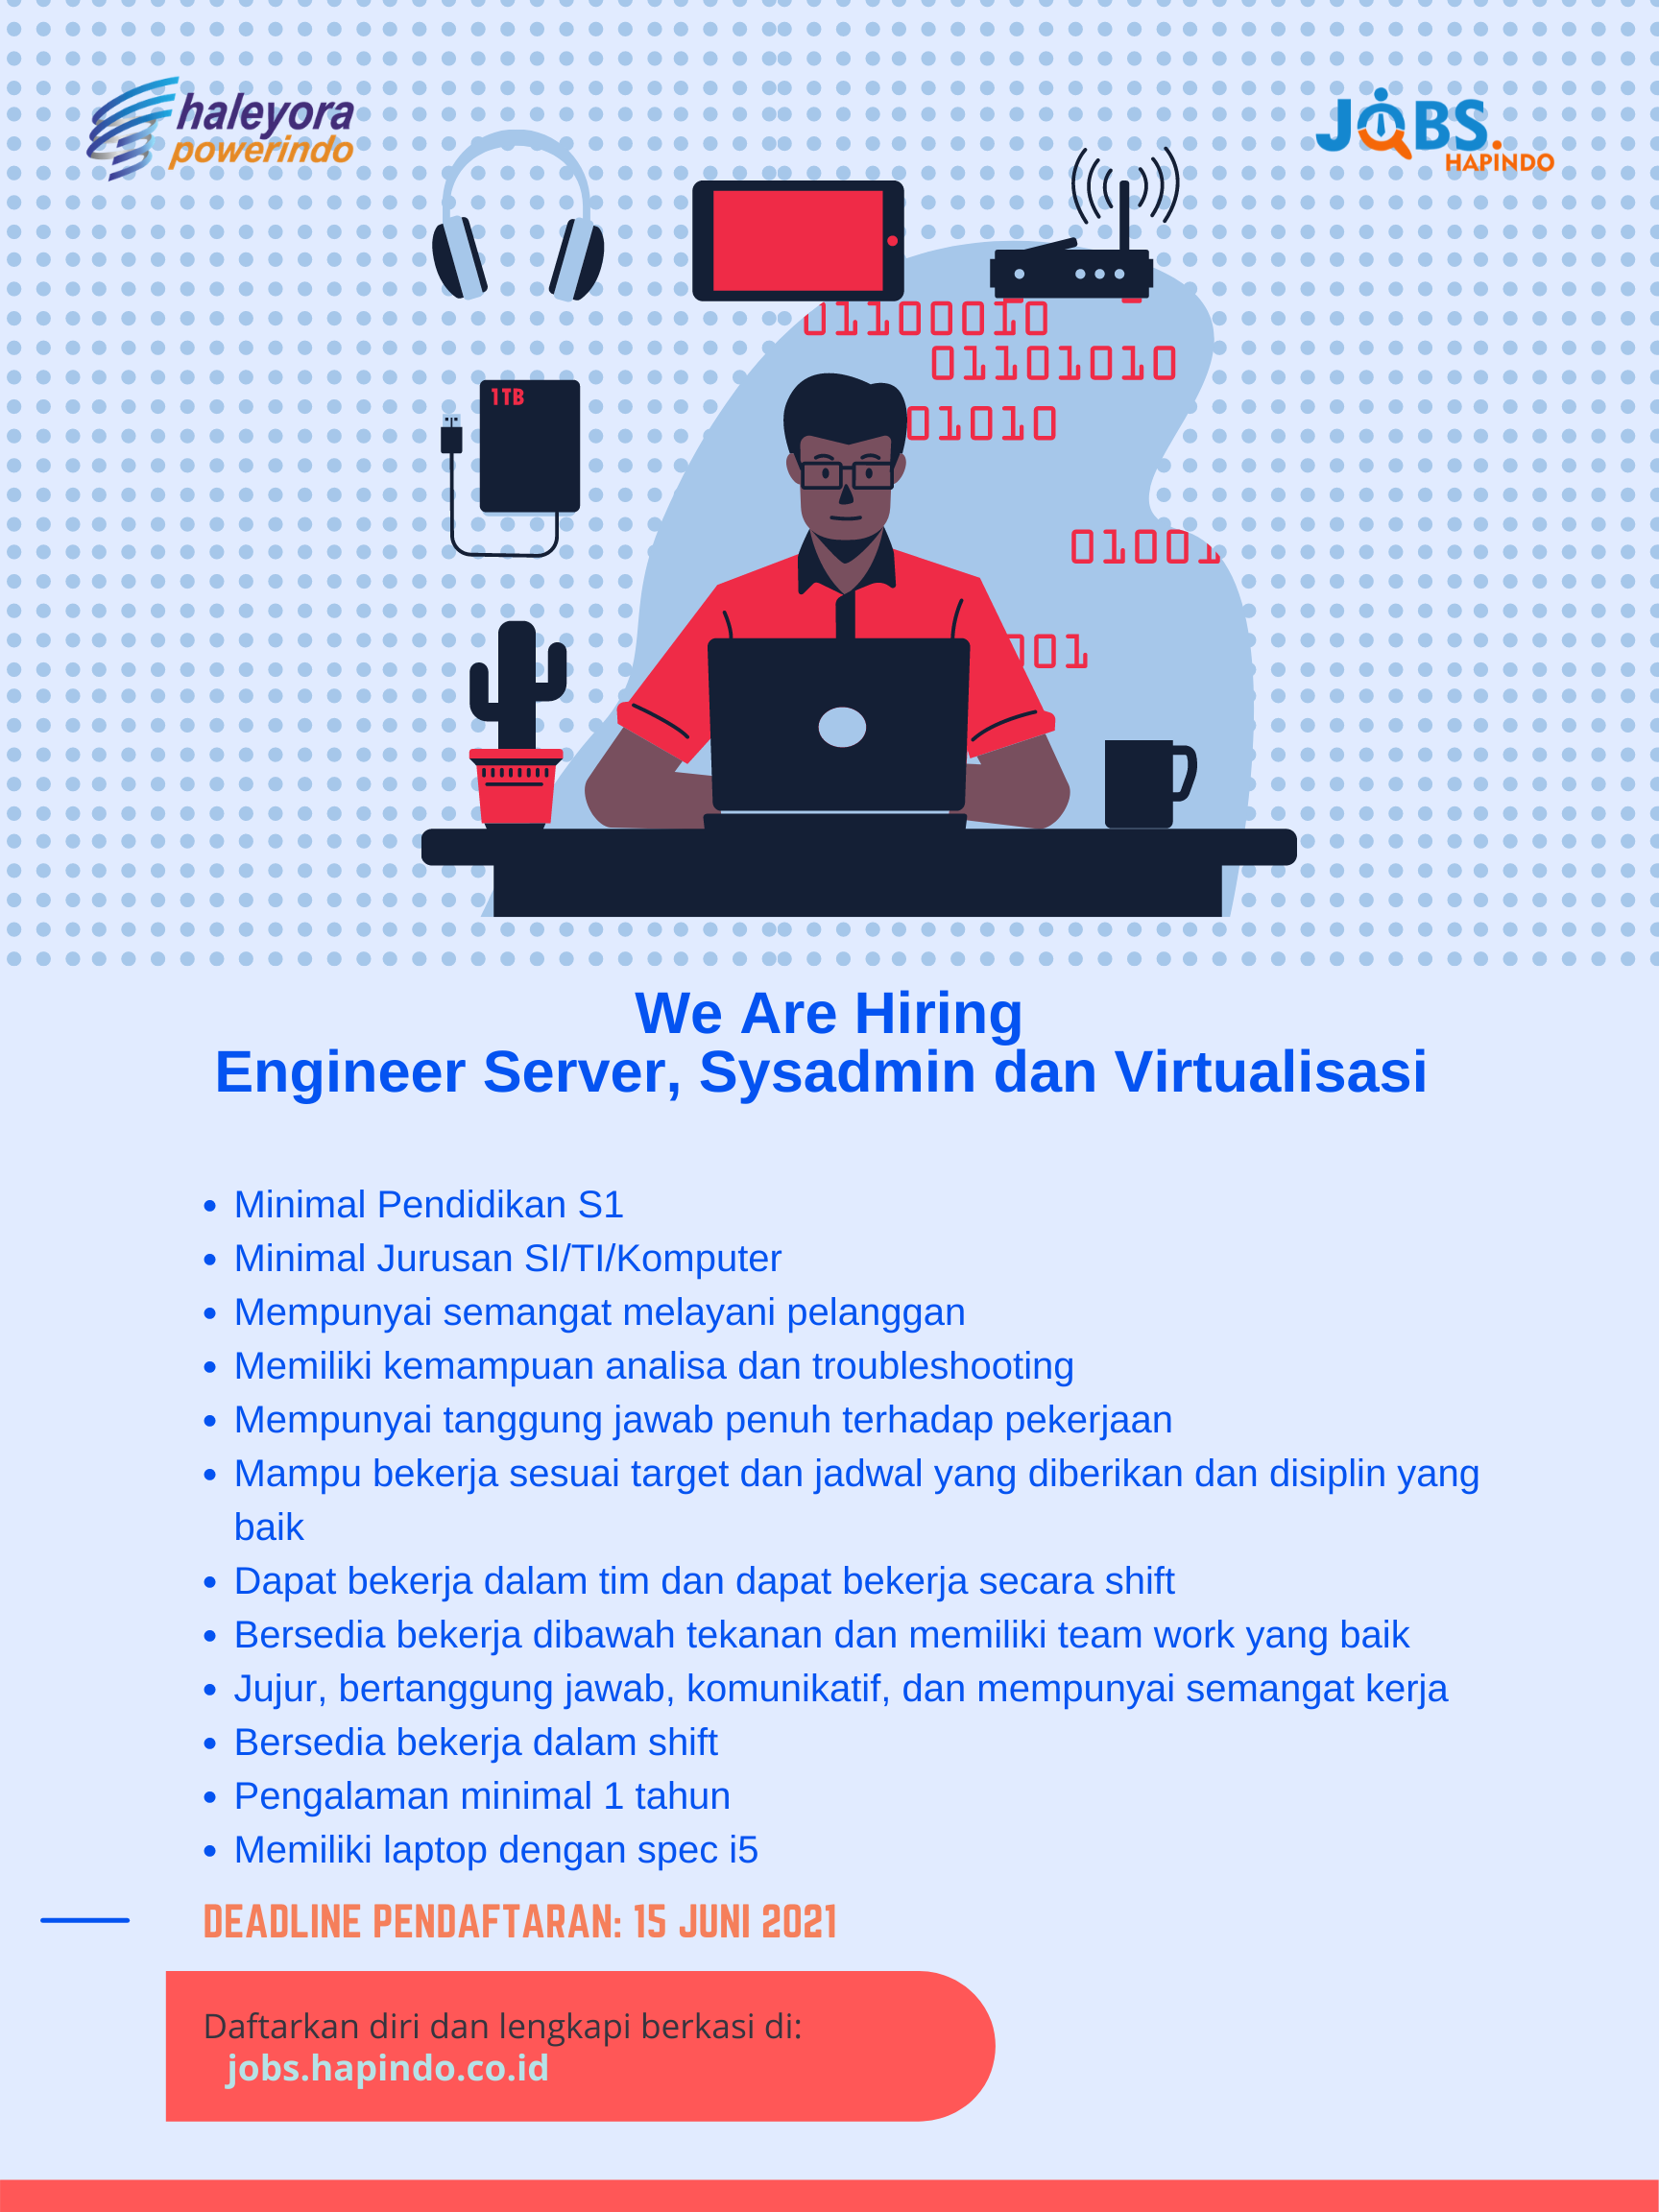 Engineer Server, Sysadmin, Virtualisasi